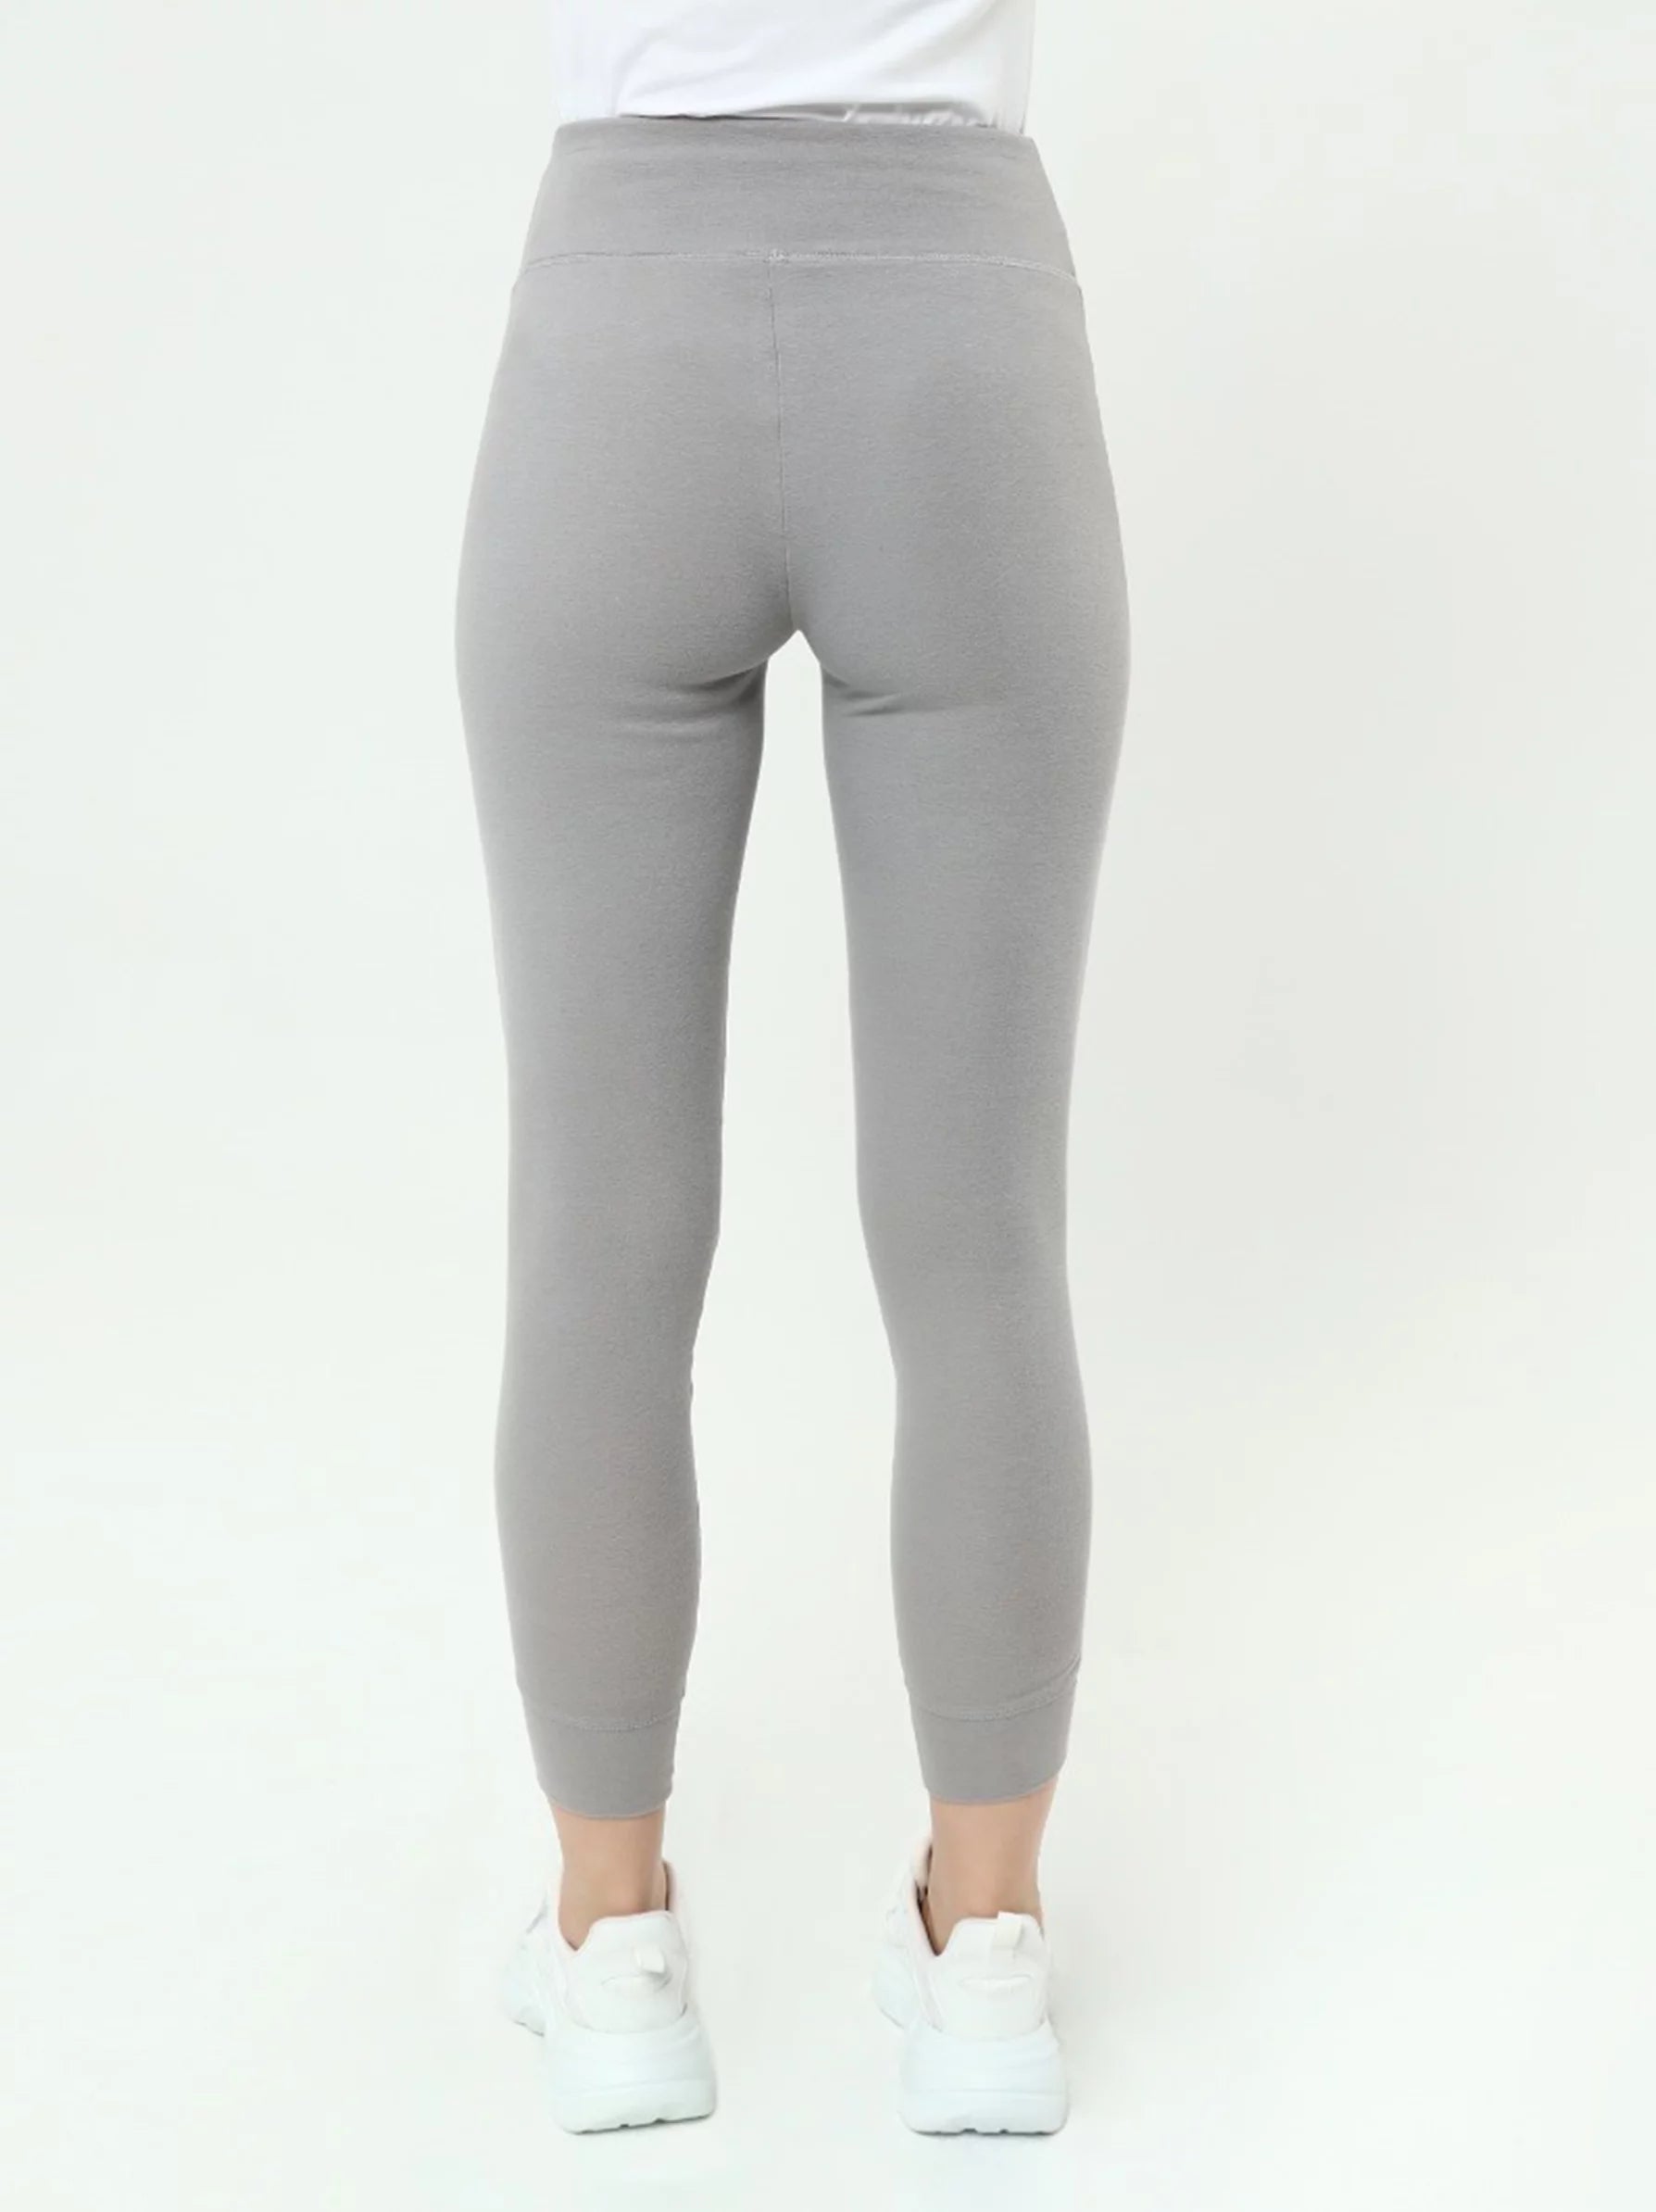 shop for women's grey leggings